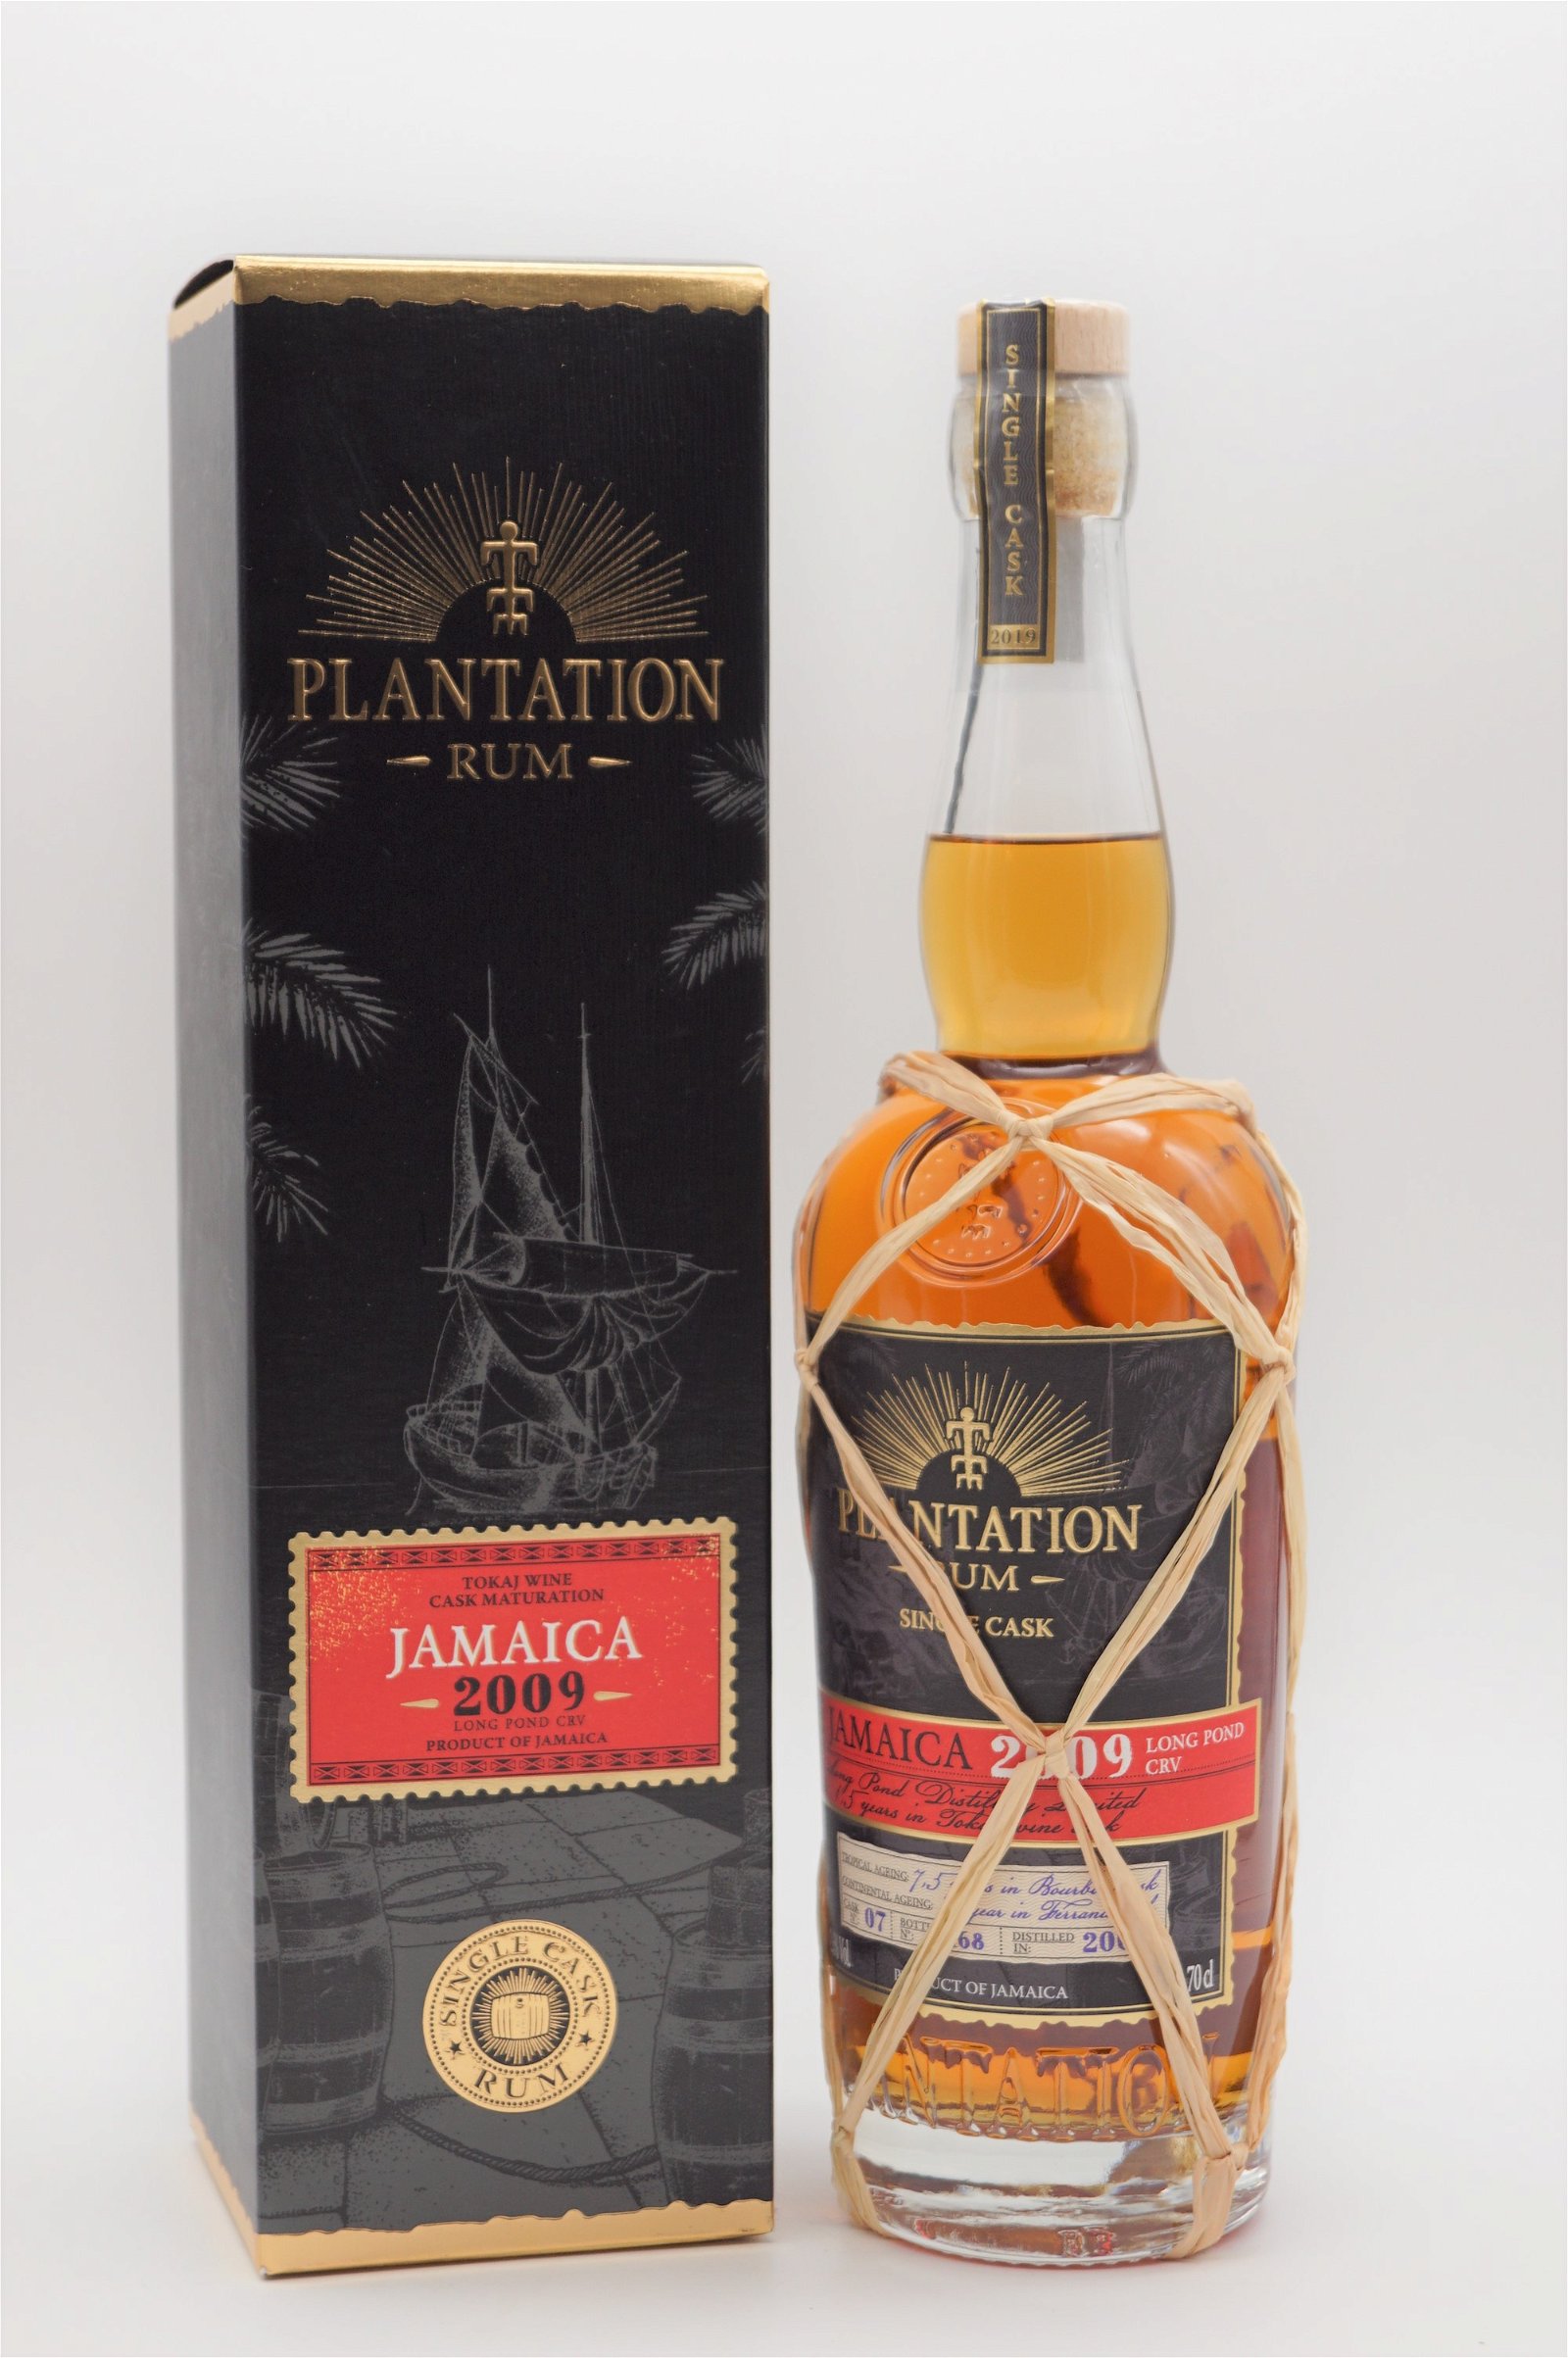 Plantation Rum Jamaica 2009 Single Cask Collection Tokaj Wine Finish